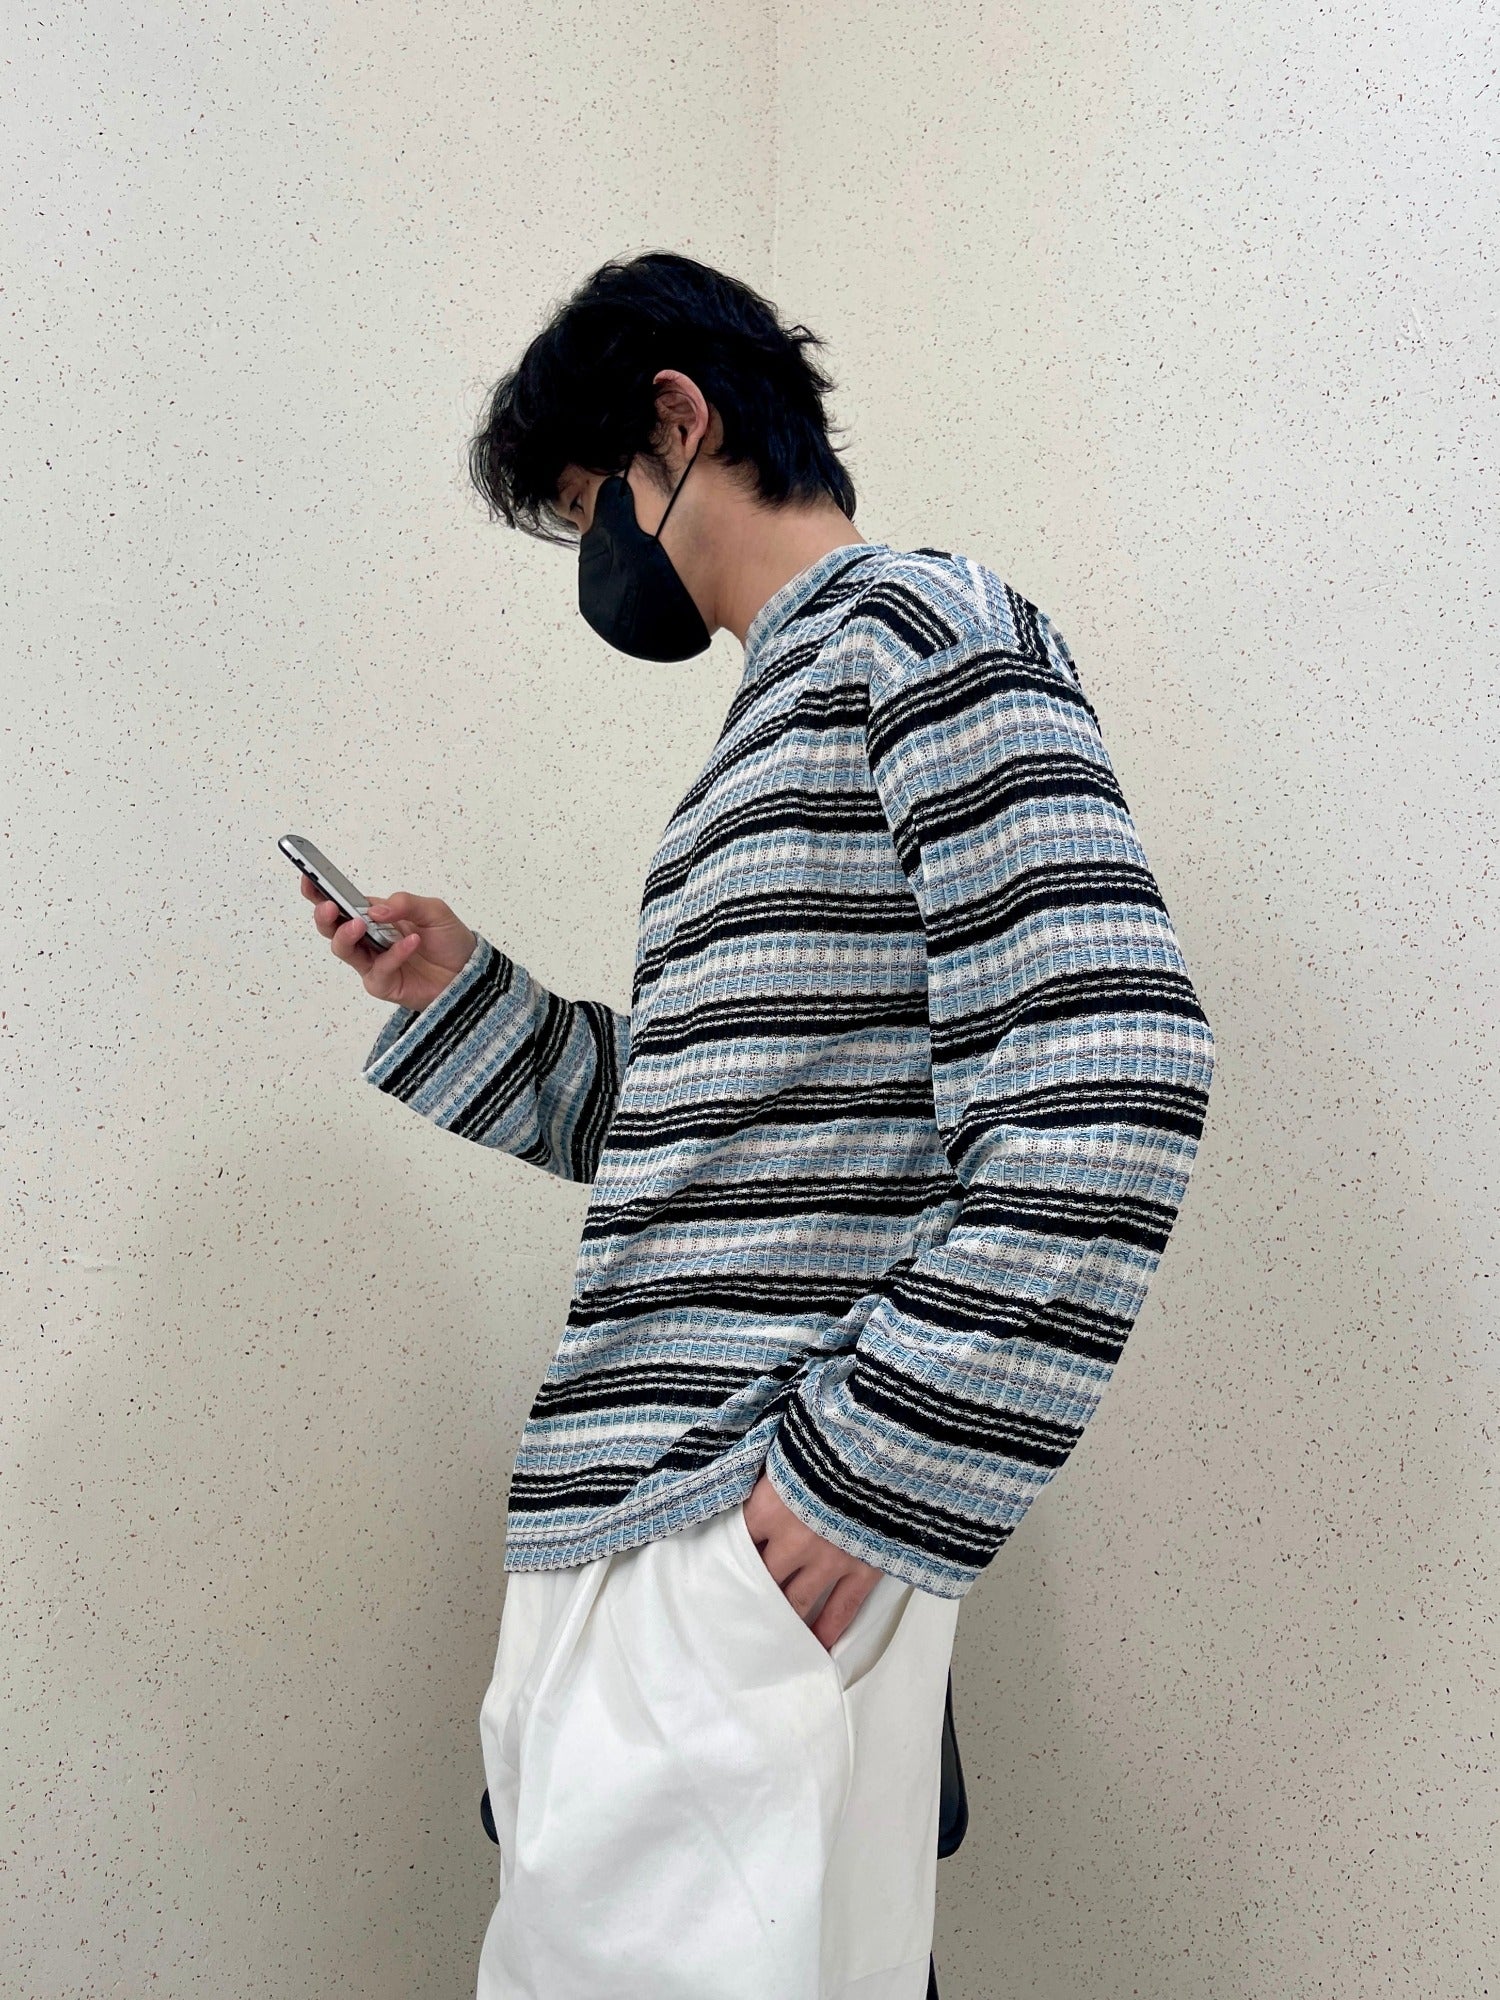 Unique Stripe Knit Black 스트라이프 니트티 봄 남자니트 루즈핏 오버핏 단가라니트 블랙